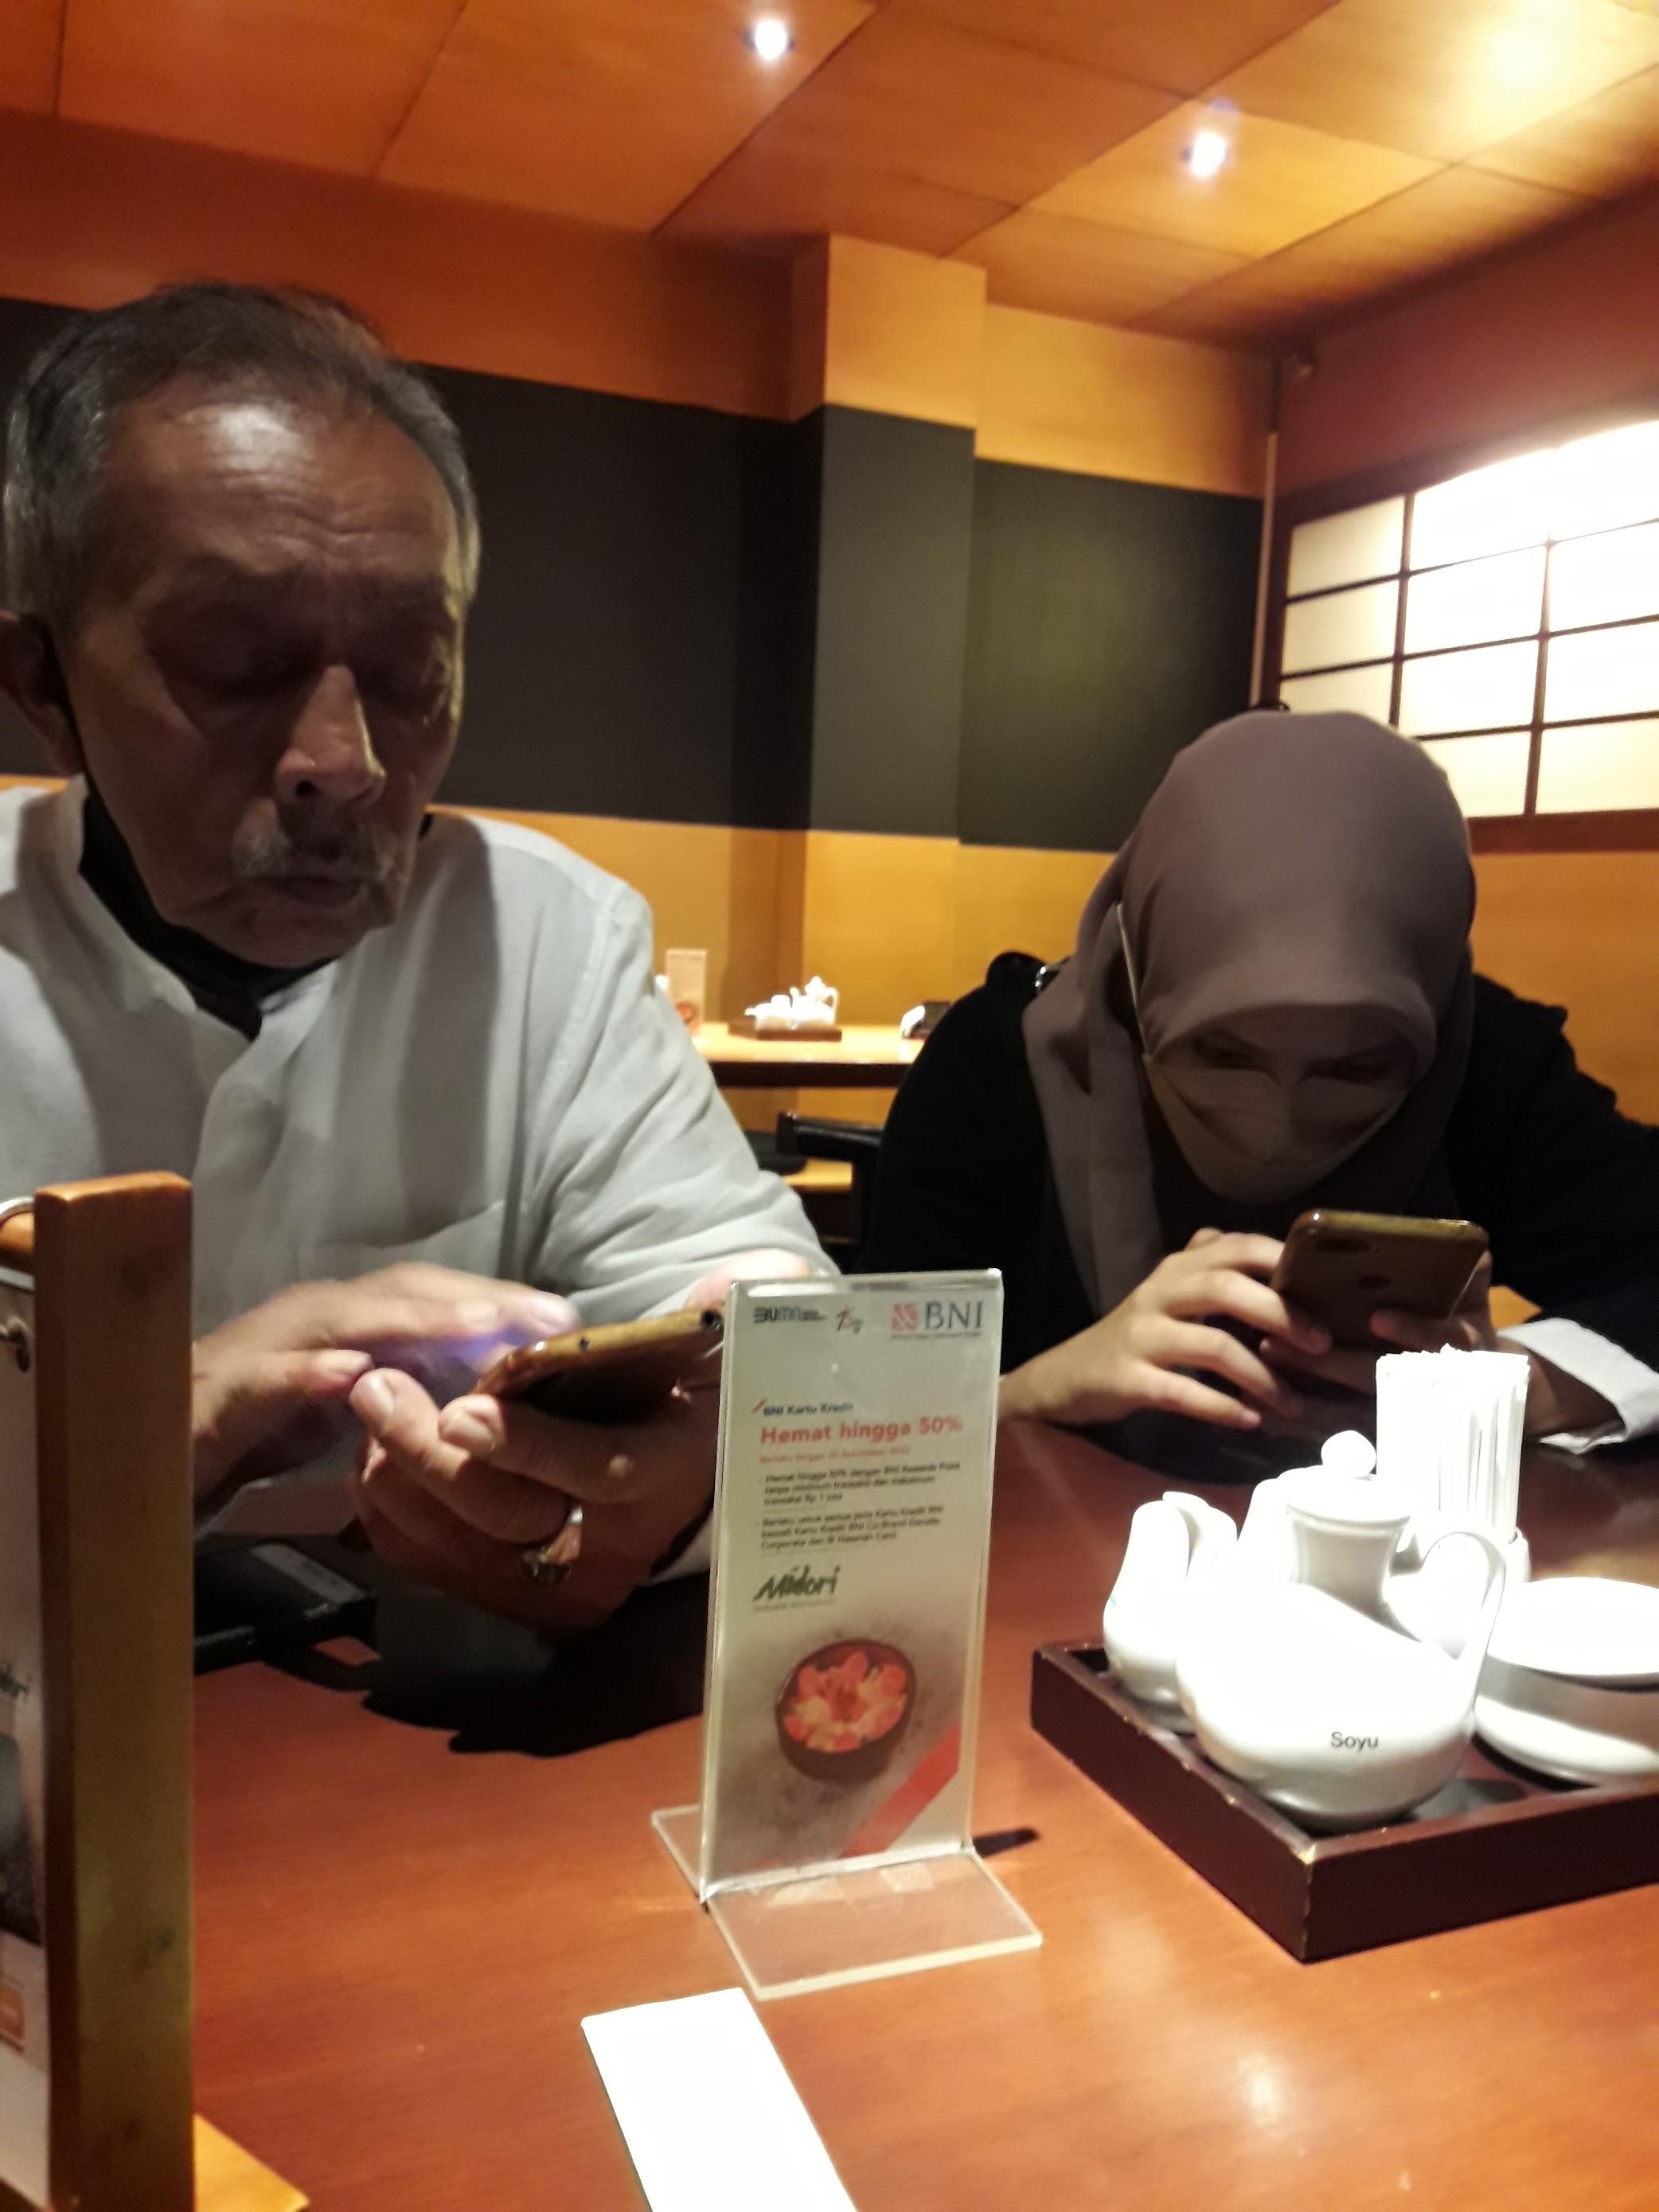 Midori Japanese Restaurant Bandung review